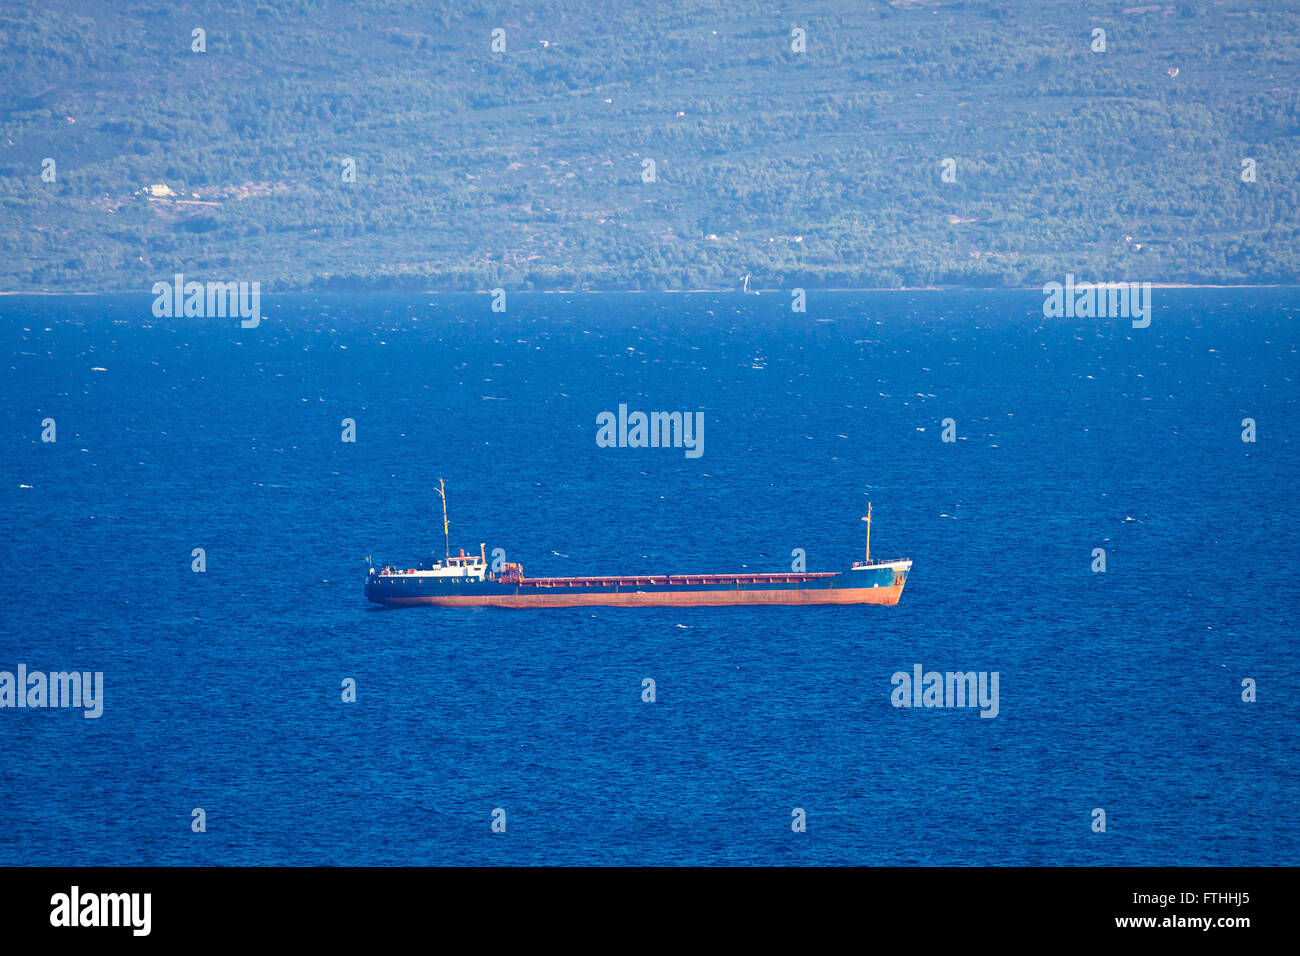 Oil tanker ship on sea view Stock Photo